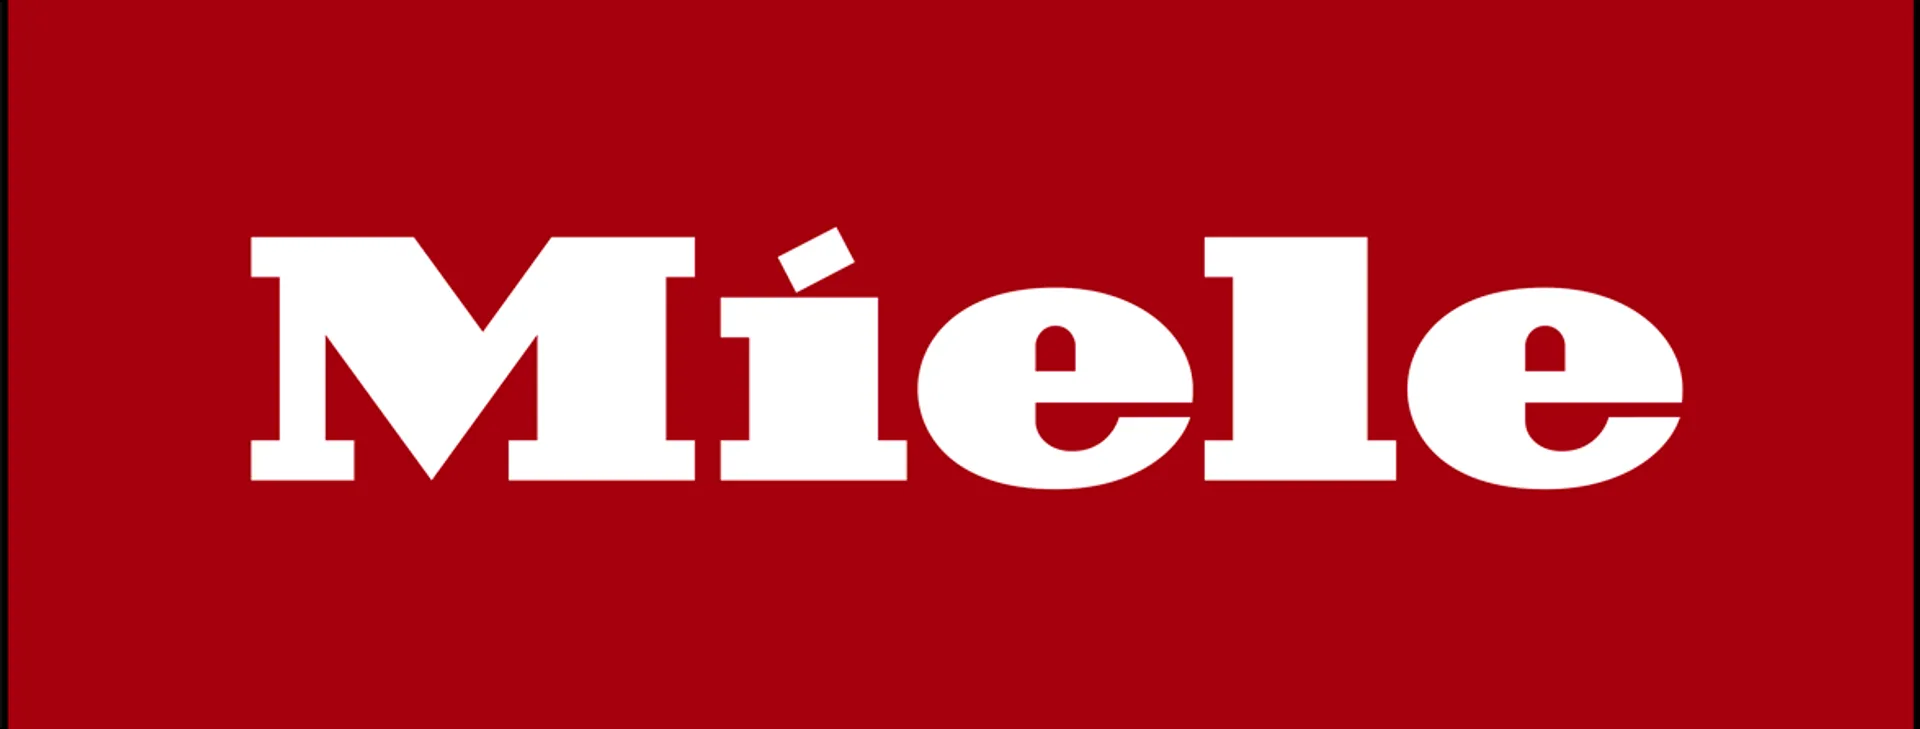 MIELE logo die aktuell Flugblatt